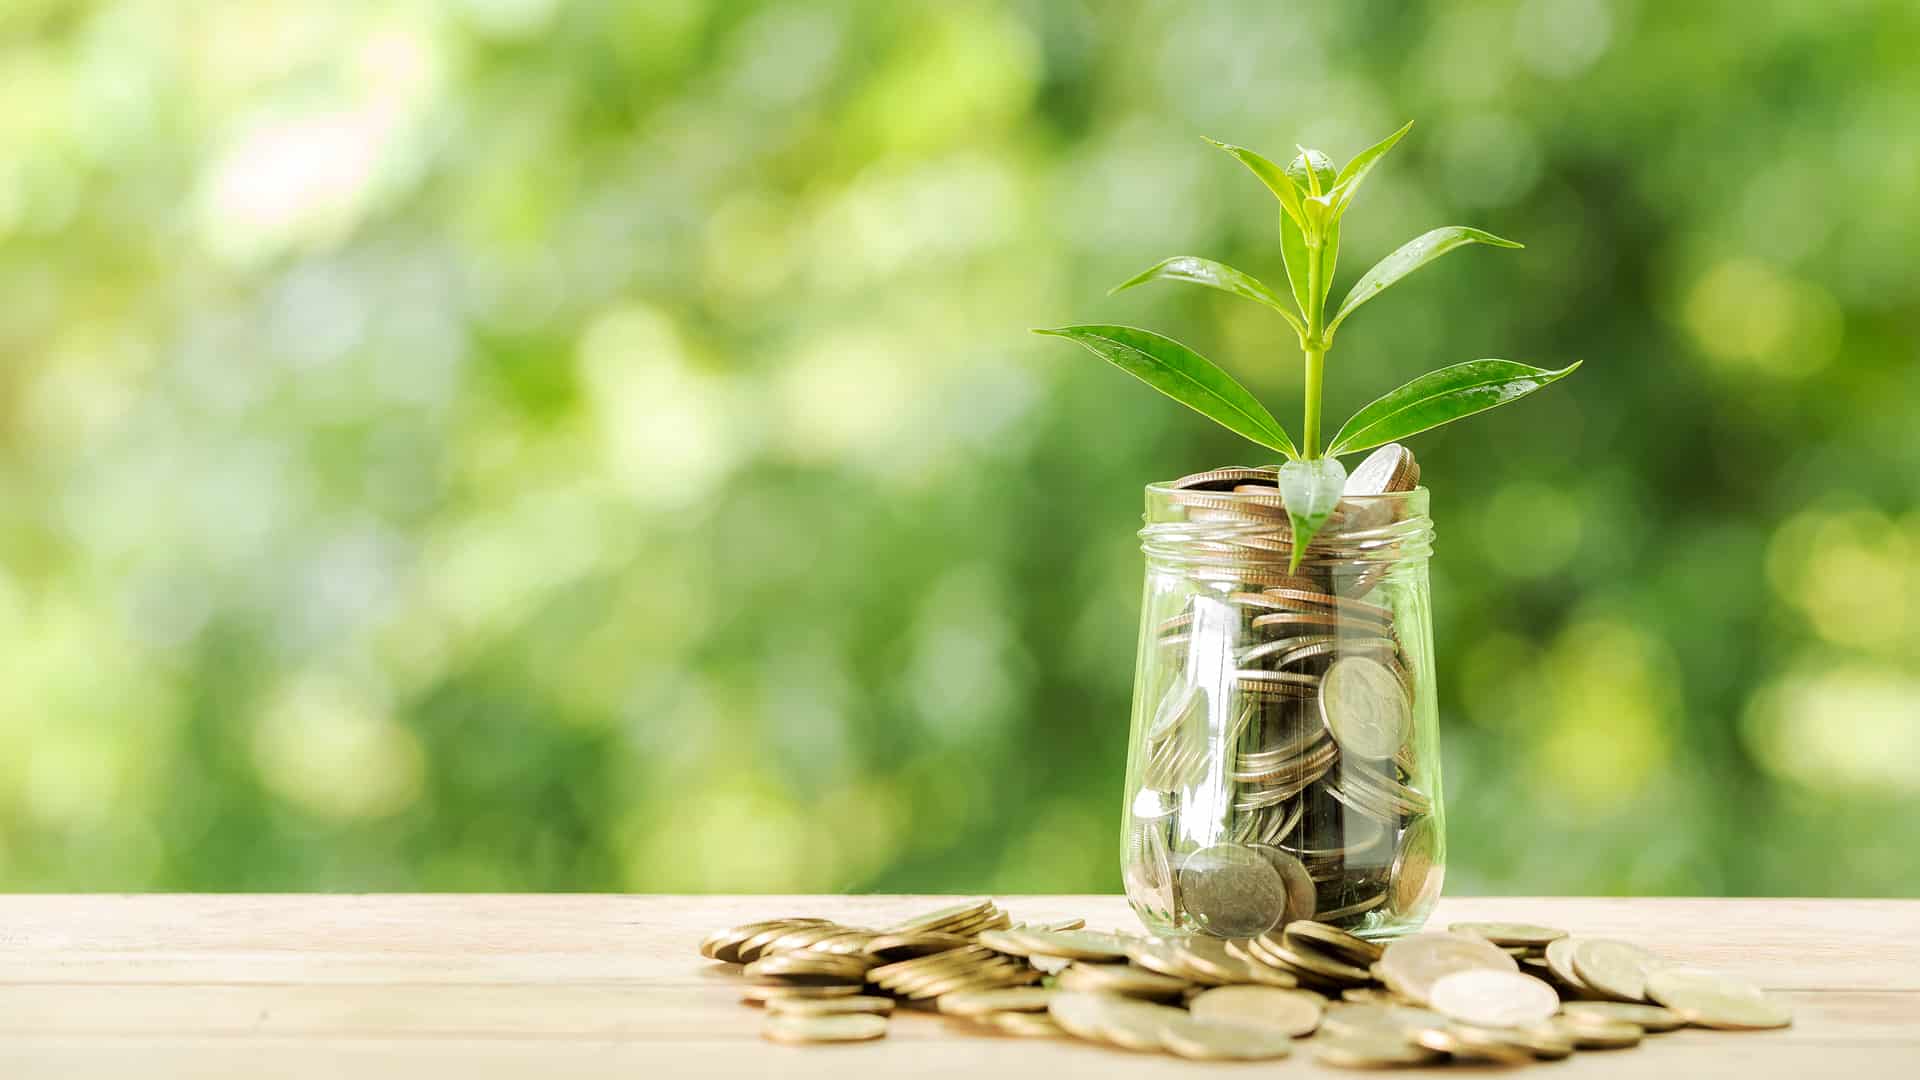 Smart Interviewing Platform BarRaiser secures $4.2M in Seed Funding Round